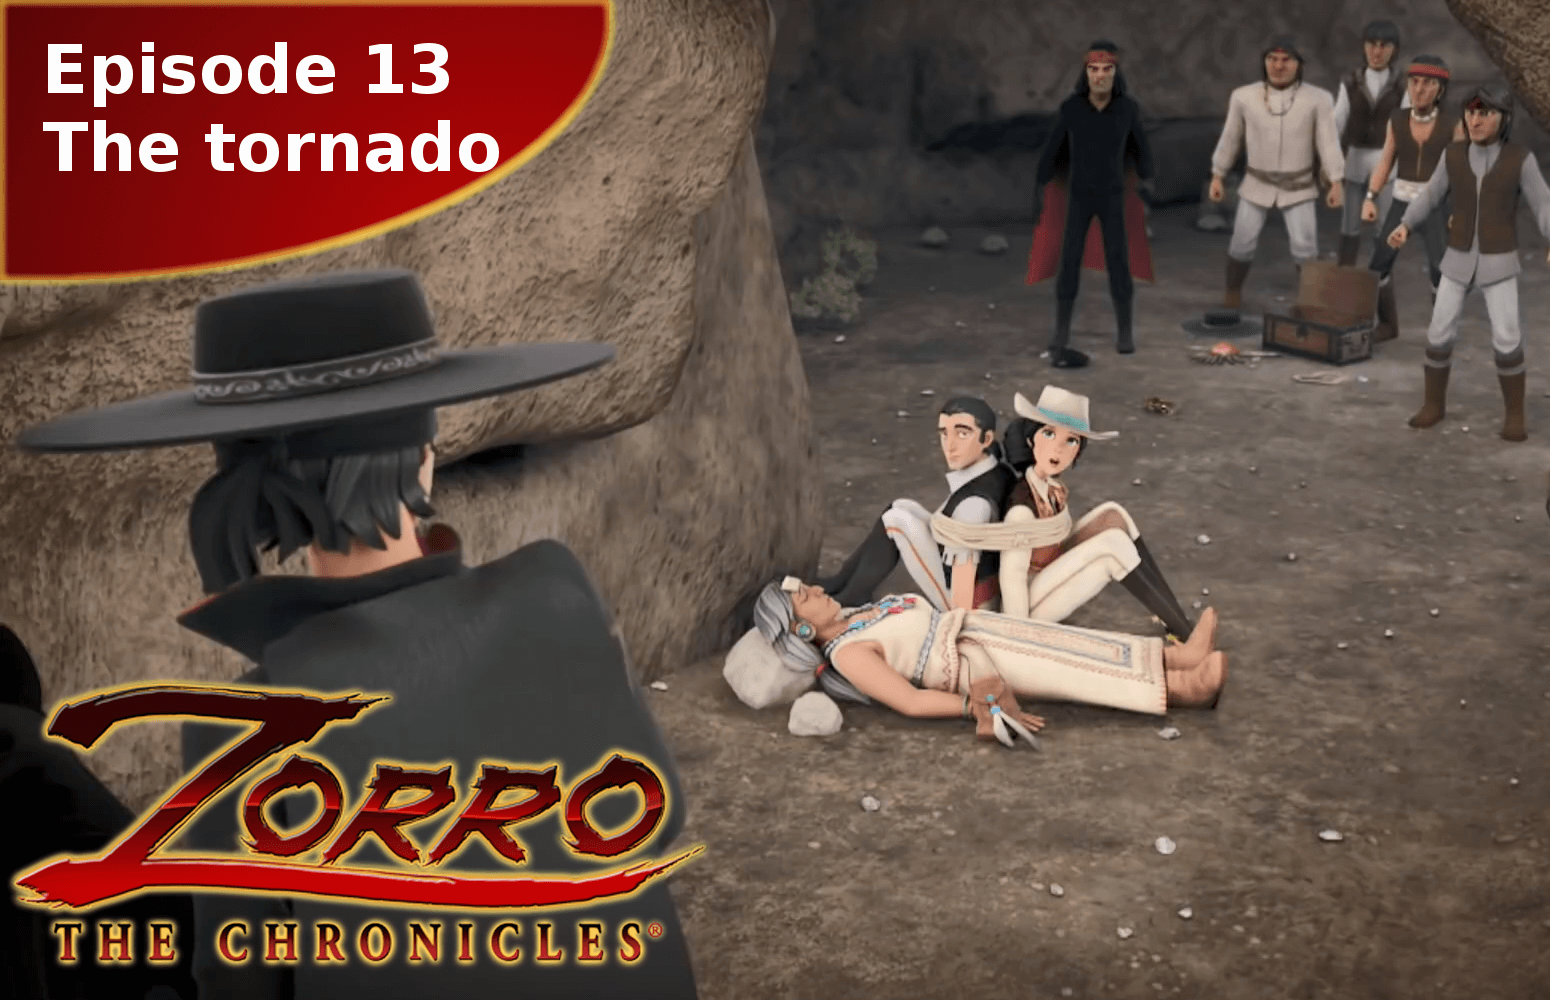 Zorro the Chronicles episode 13 The tornado